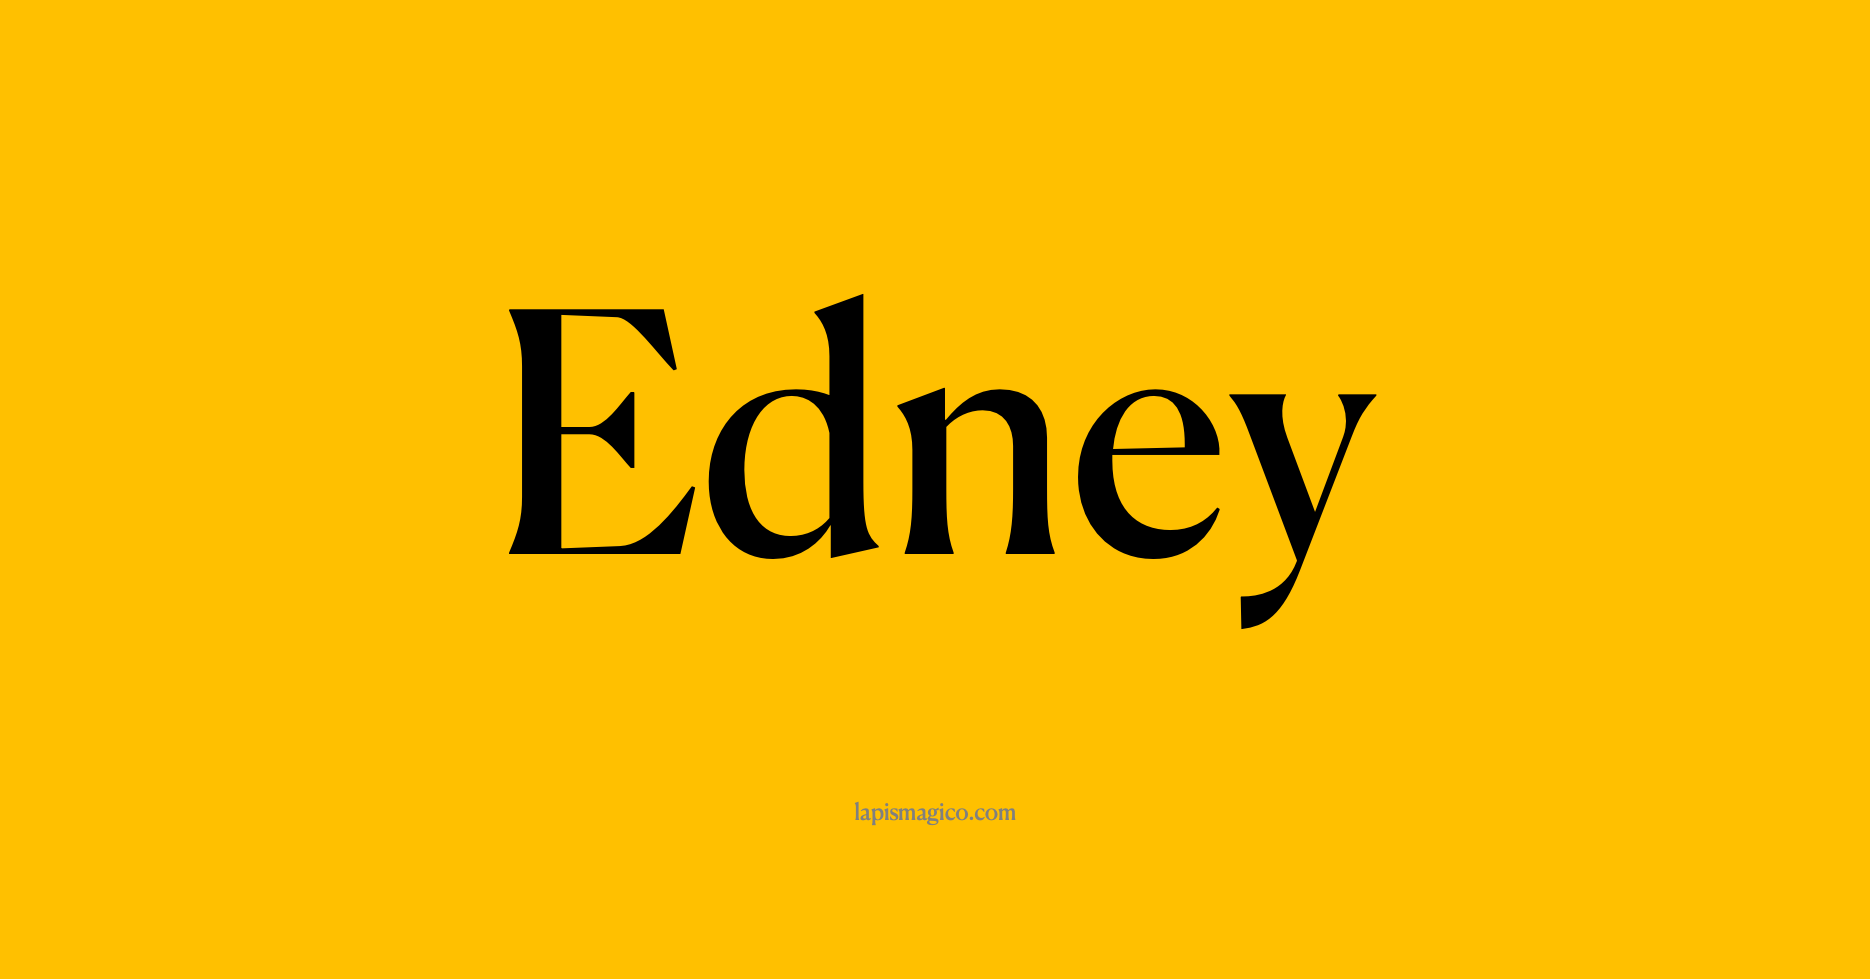 Nome Edney